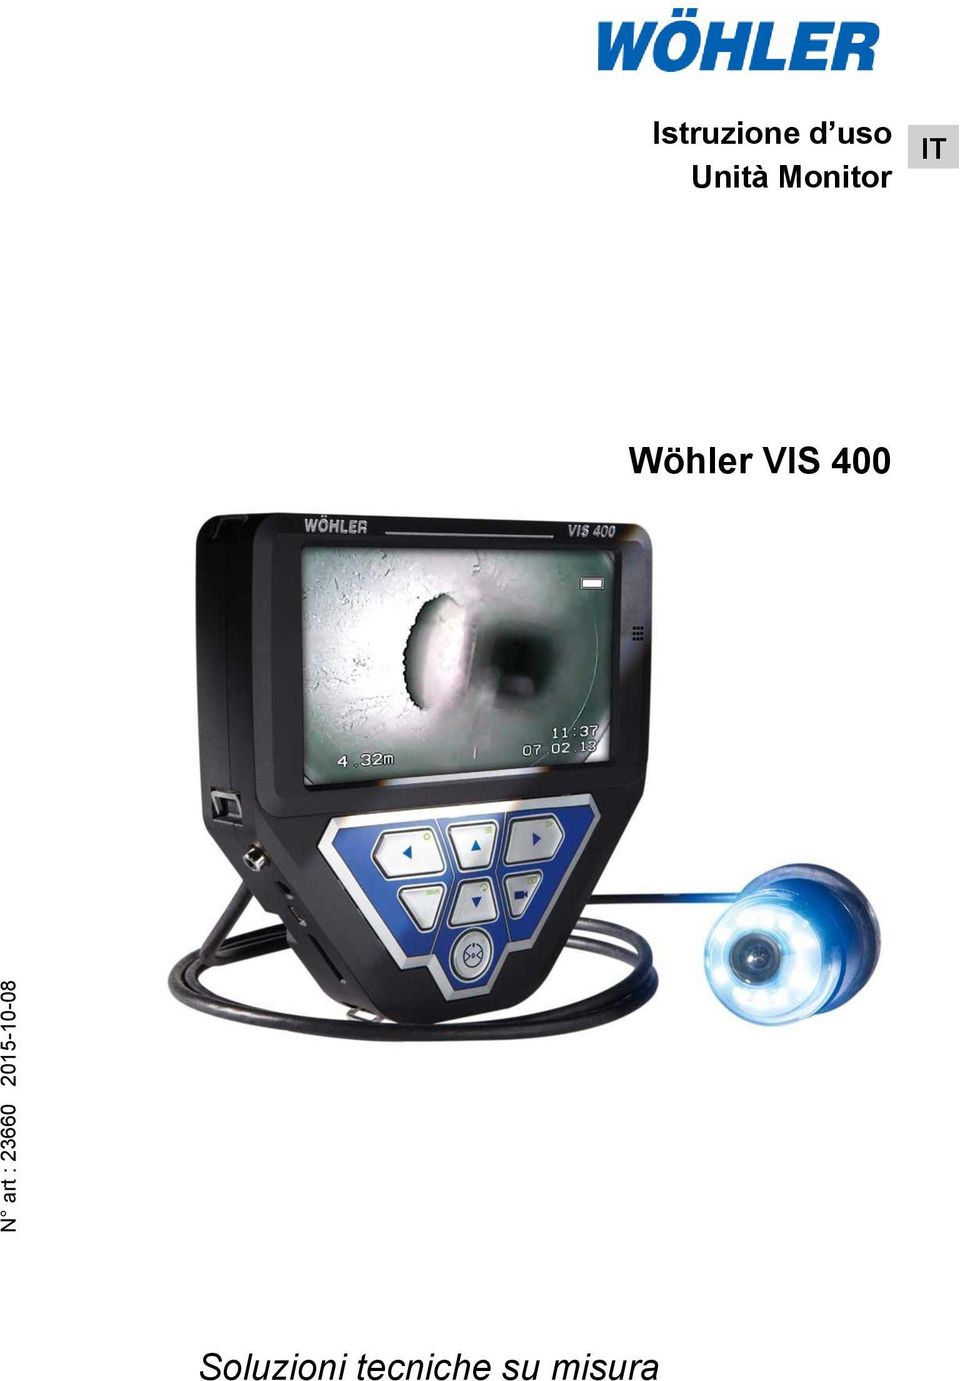 Monitor IT Wöhler VIS 400